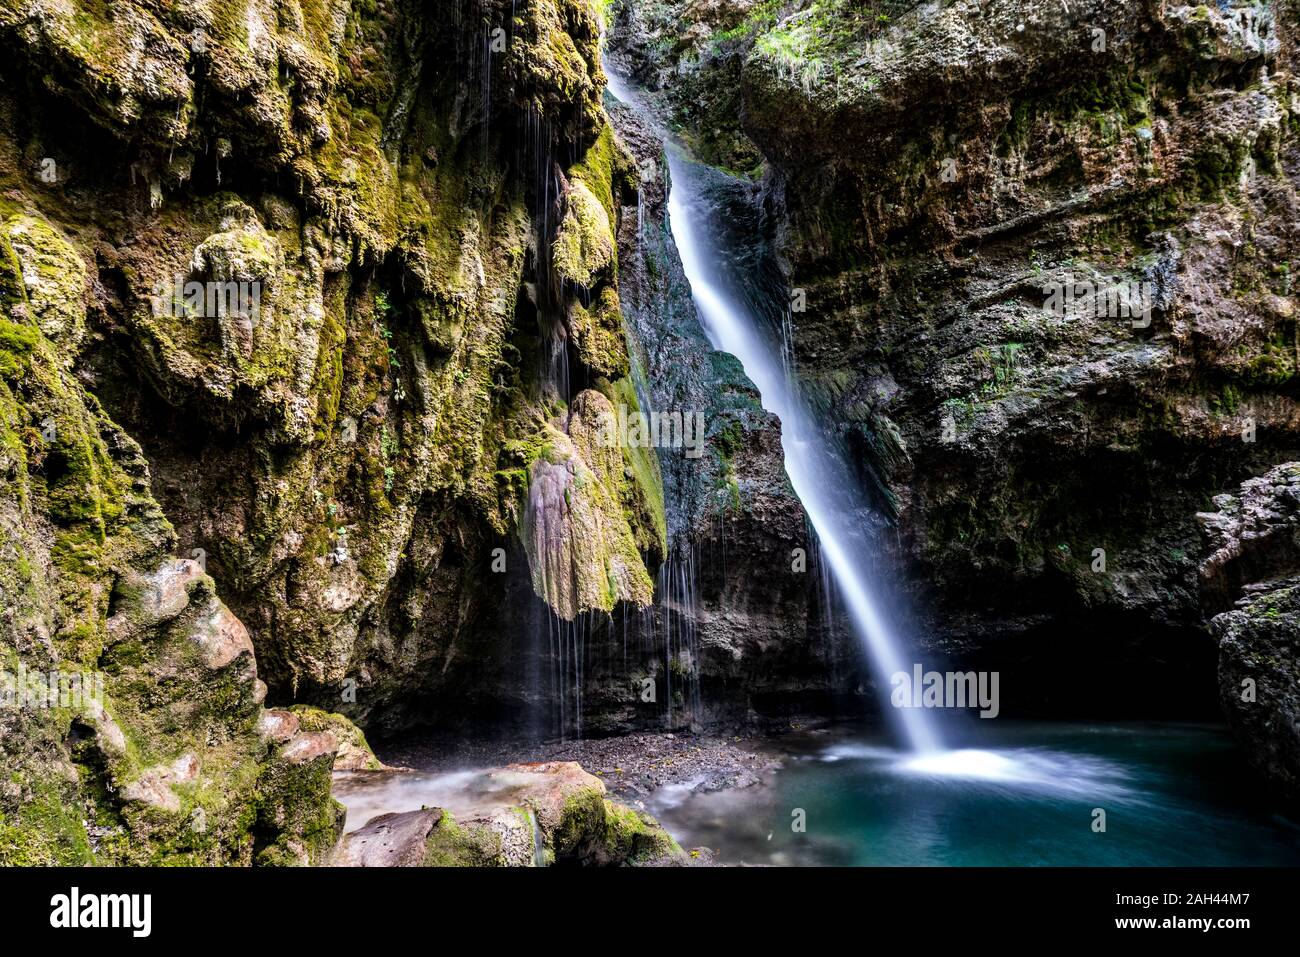 Germany, Bavaria, Long exposure of Hinanger waterfall in Allgauer Hochalpen nature reserve Stock Photo